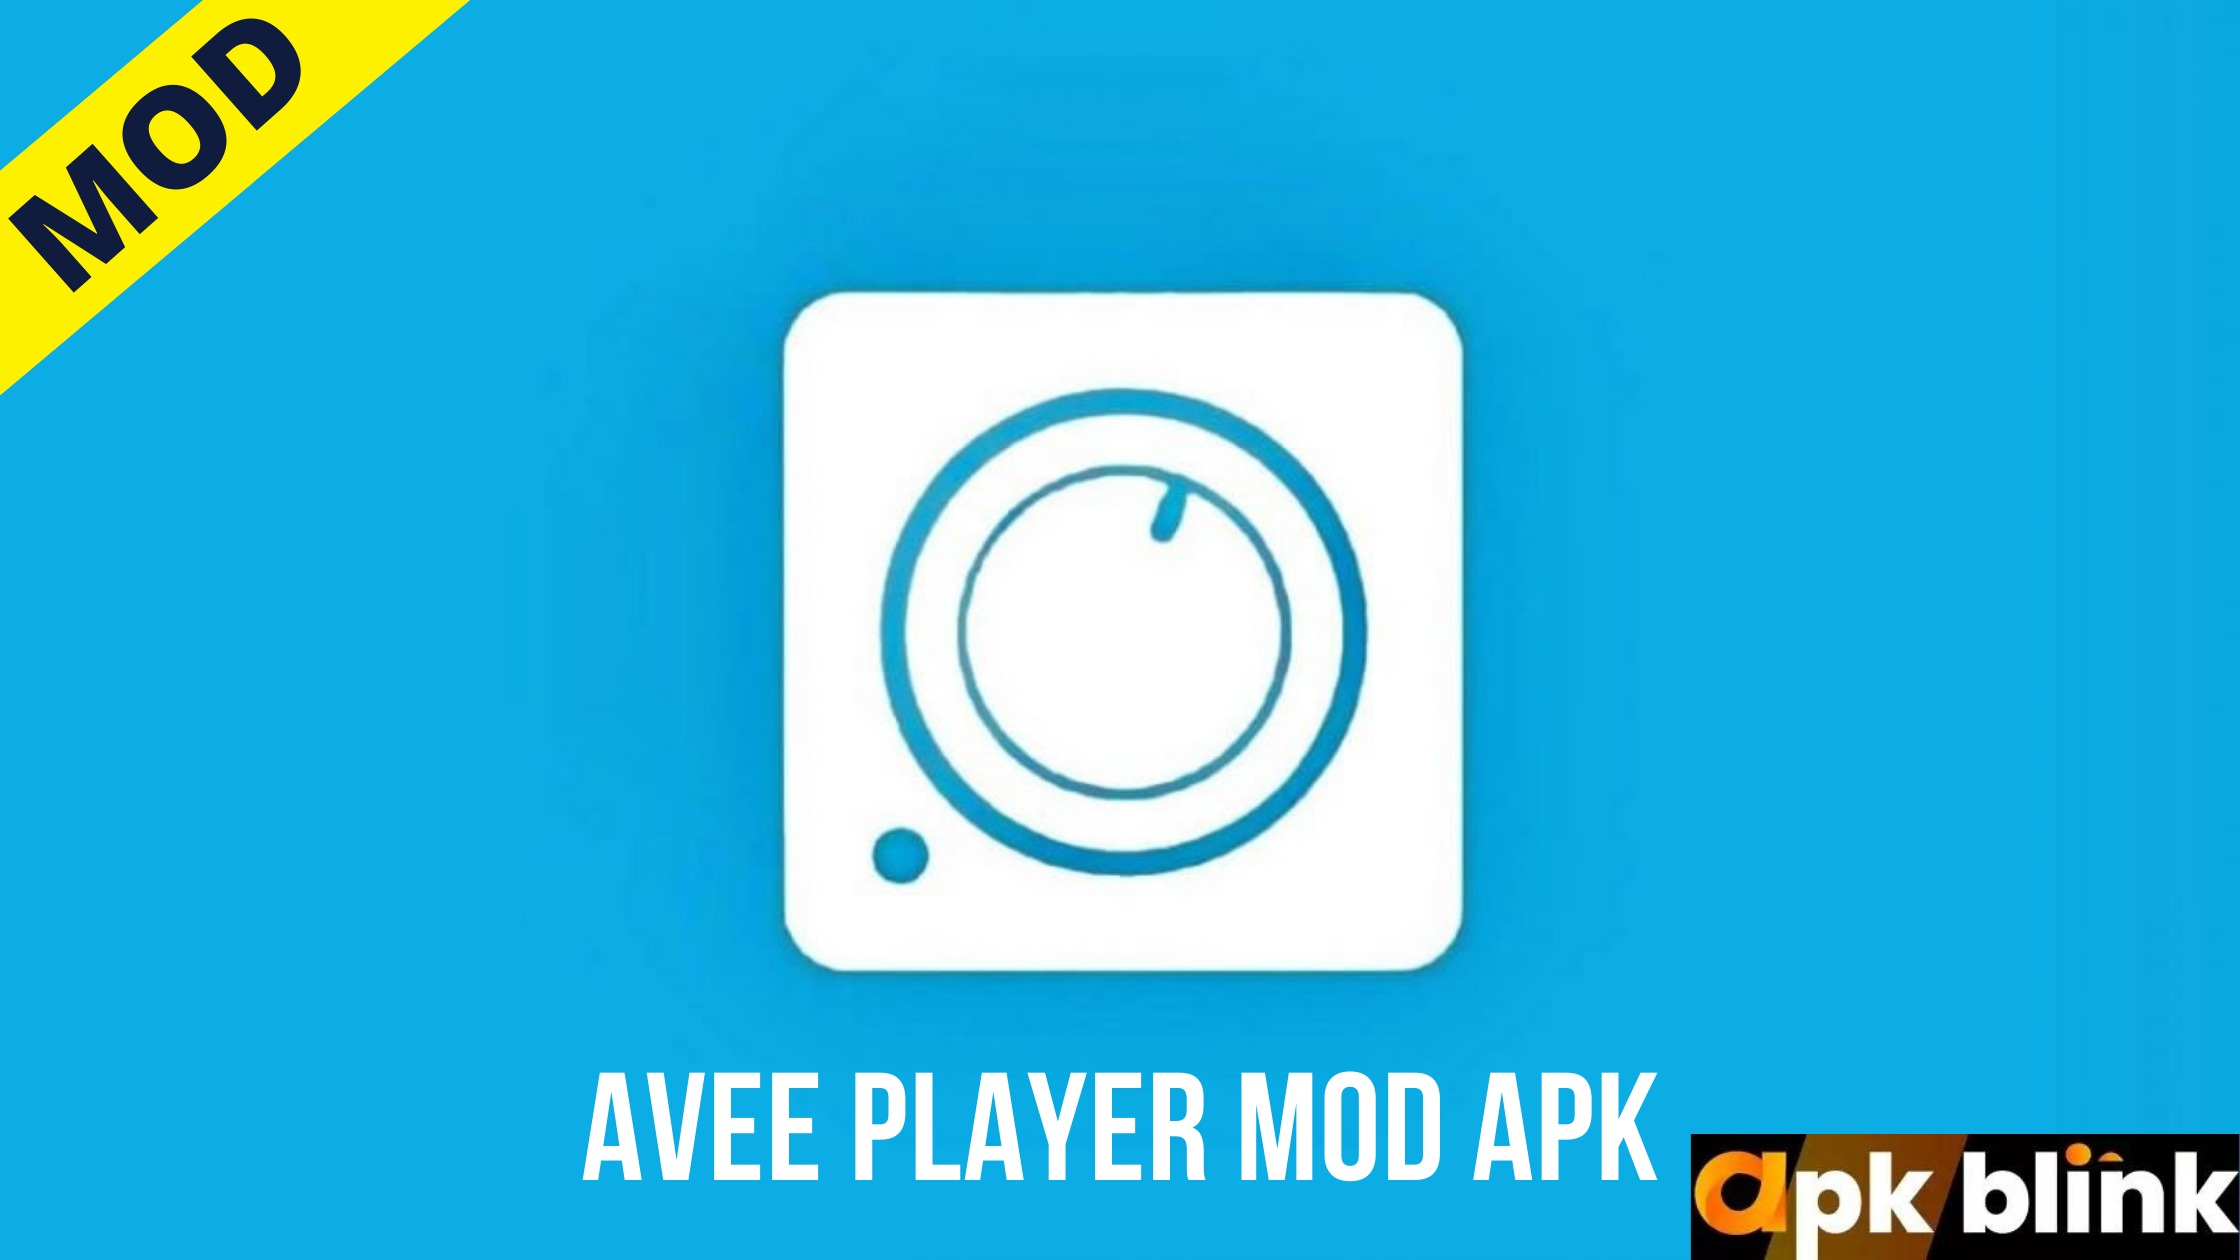 Avee Player Mod APK